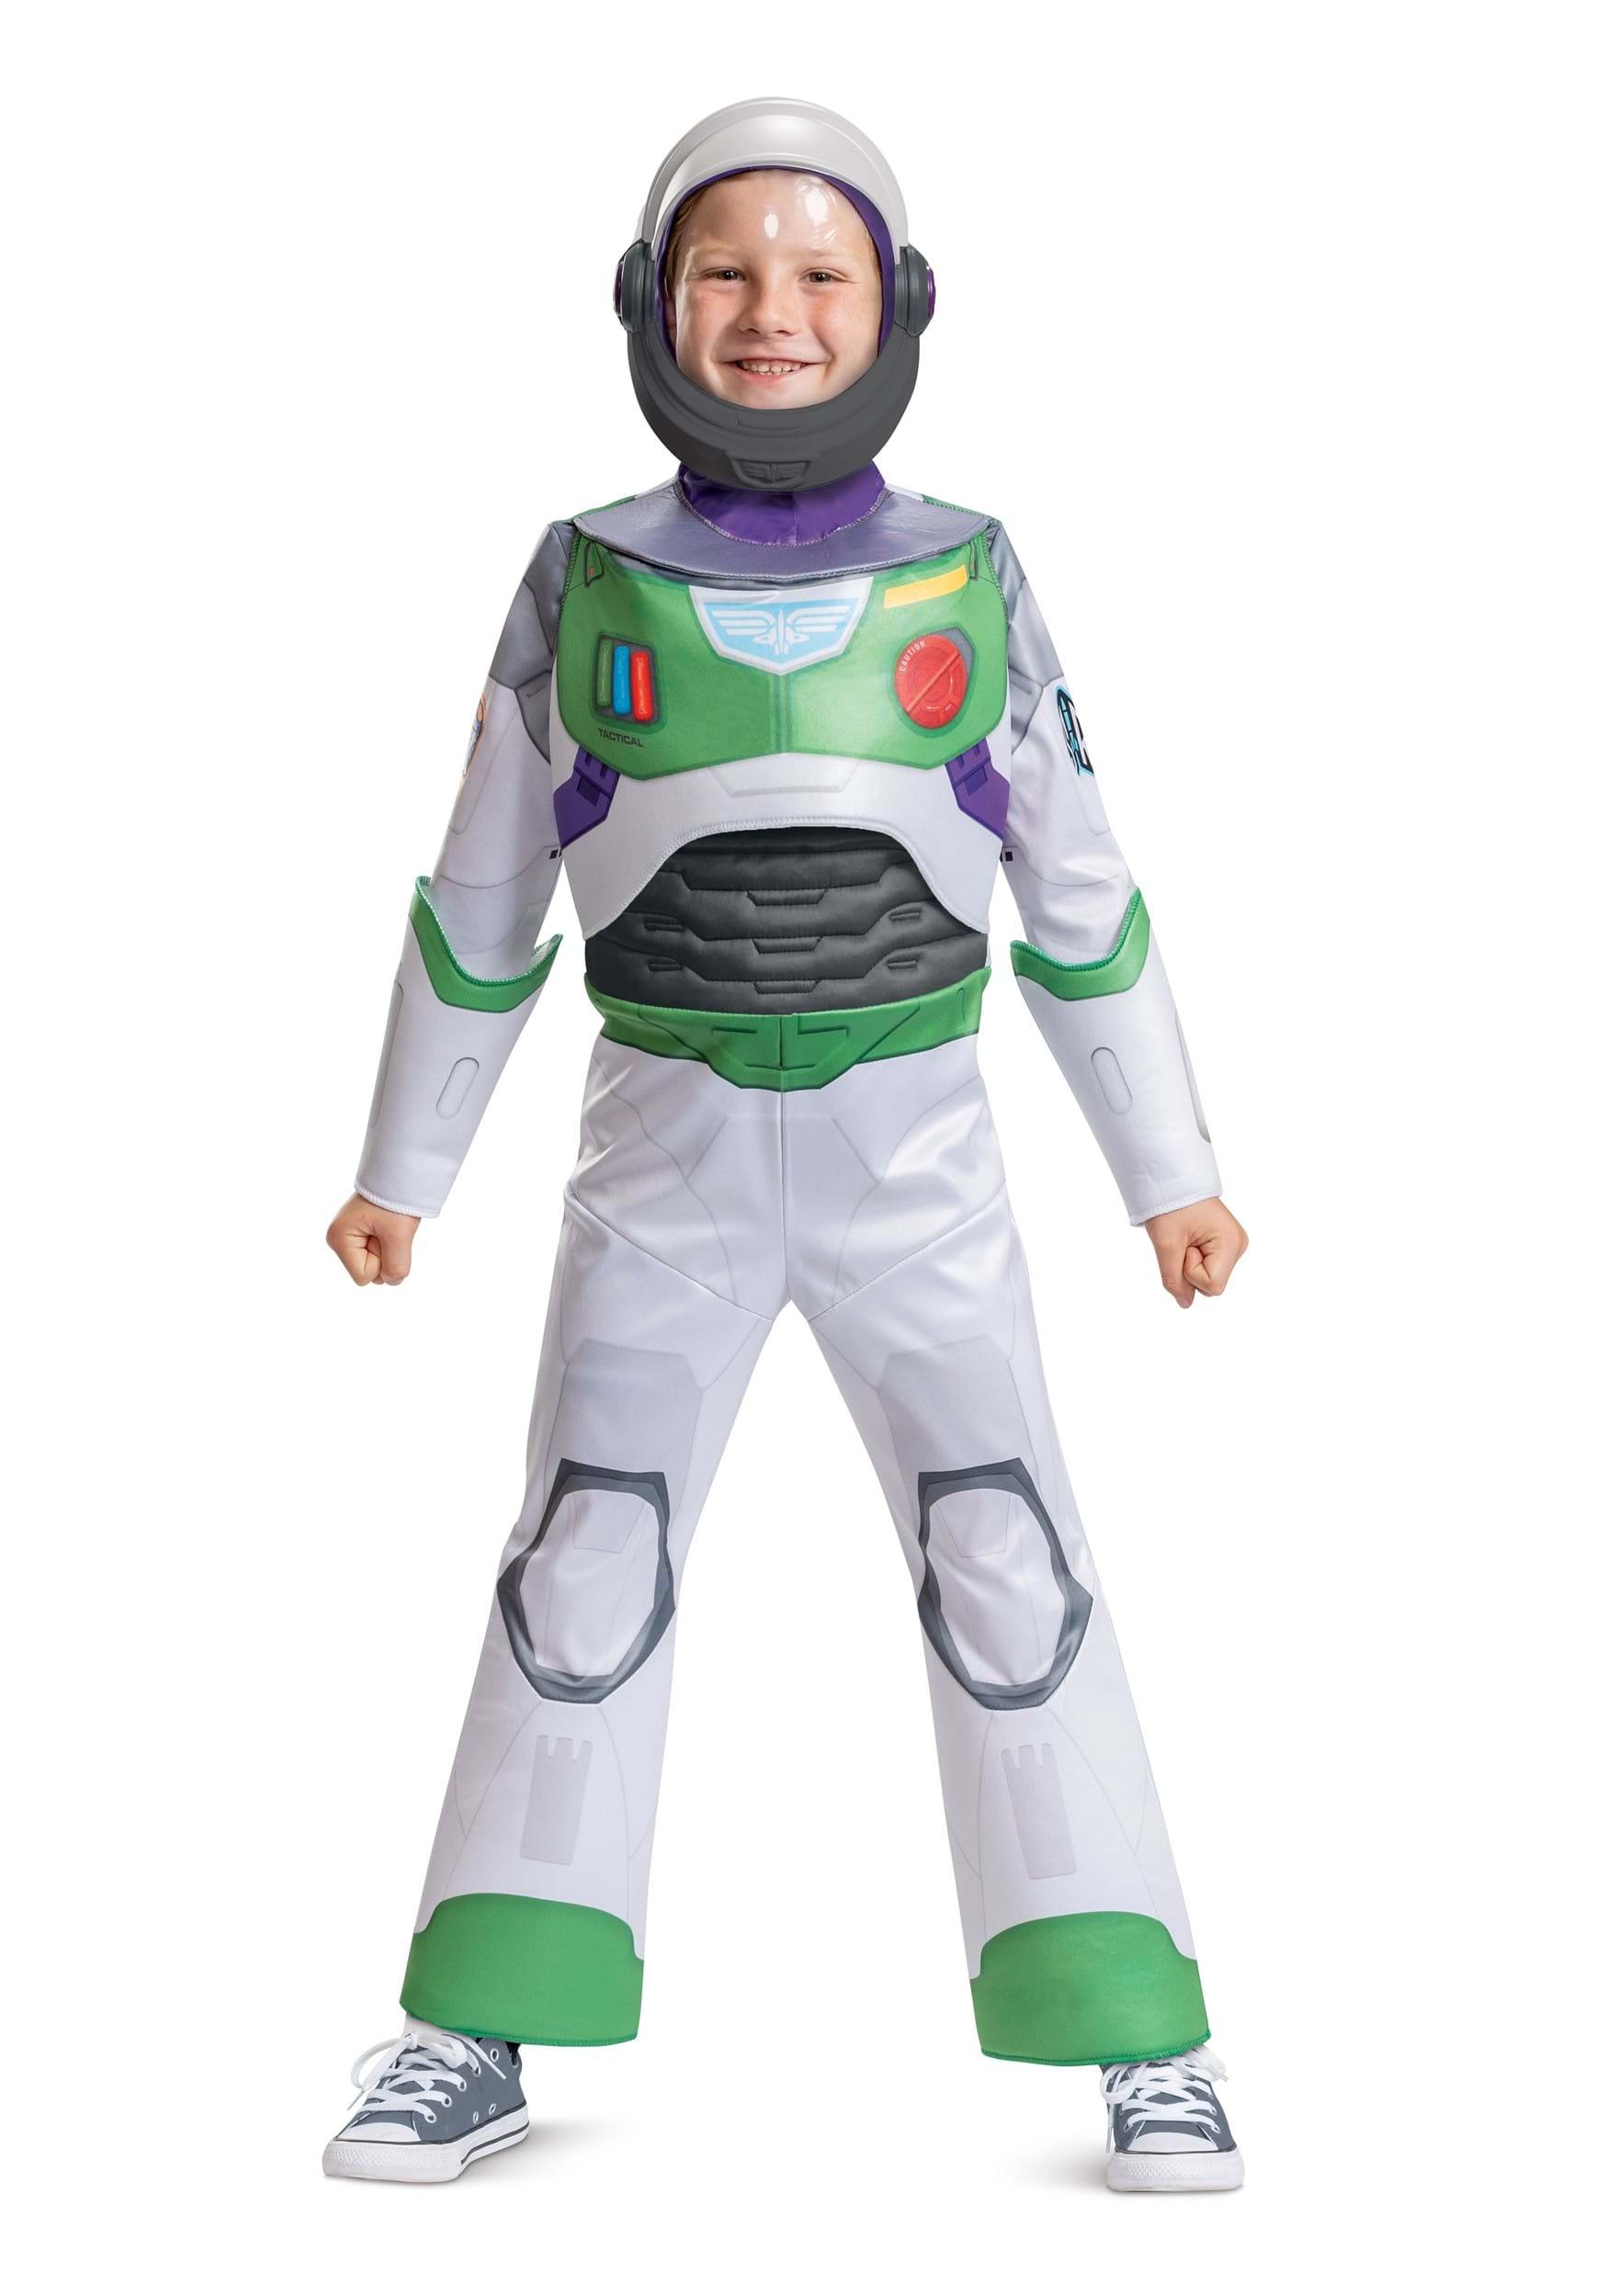 Lightyear Space Ranger Deluxe Costume for Kids | Pixar